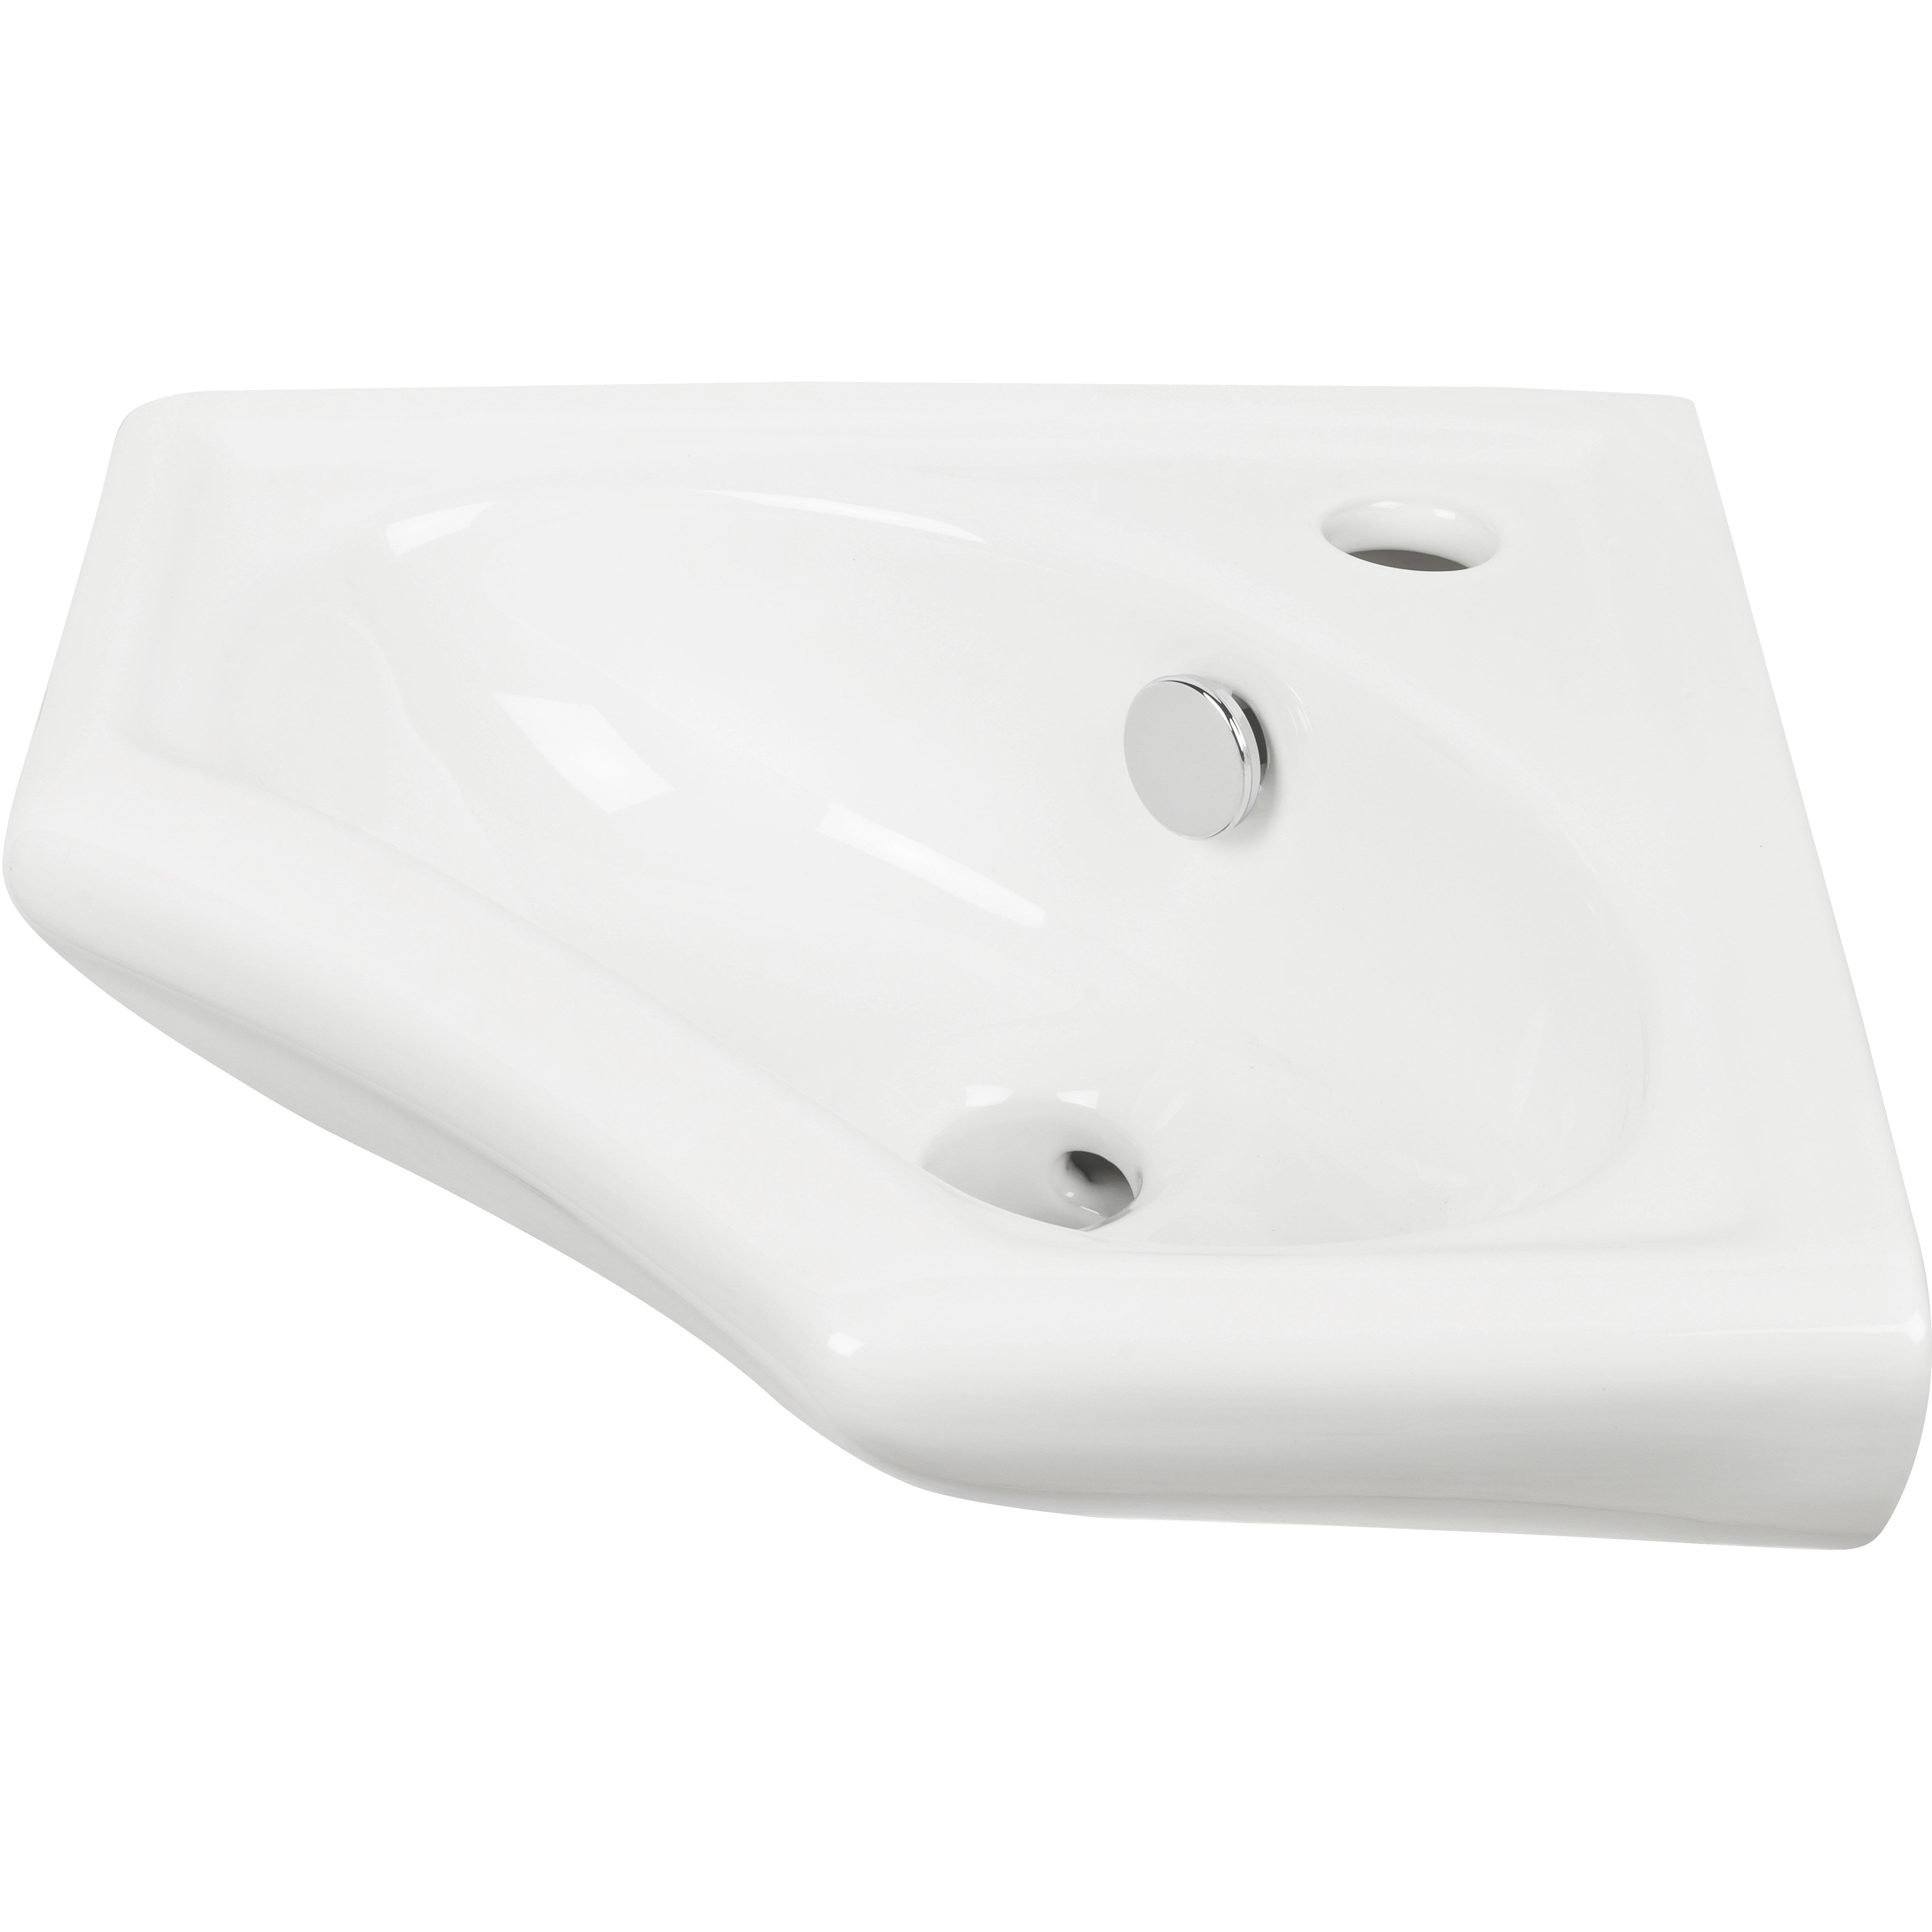 AquaSu scaLma Eck-Handwaschbecken 34 cm Weiß